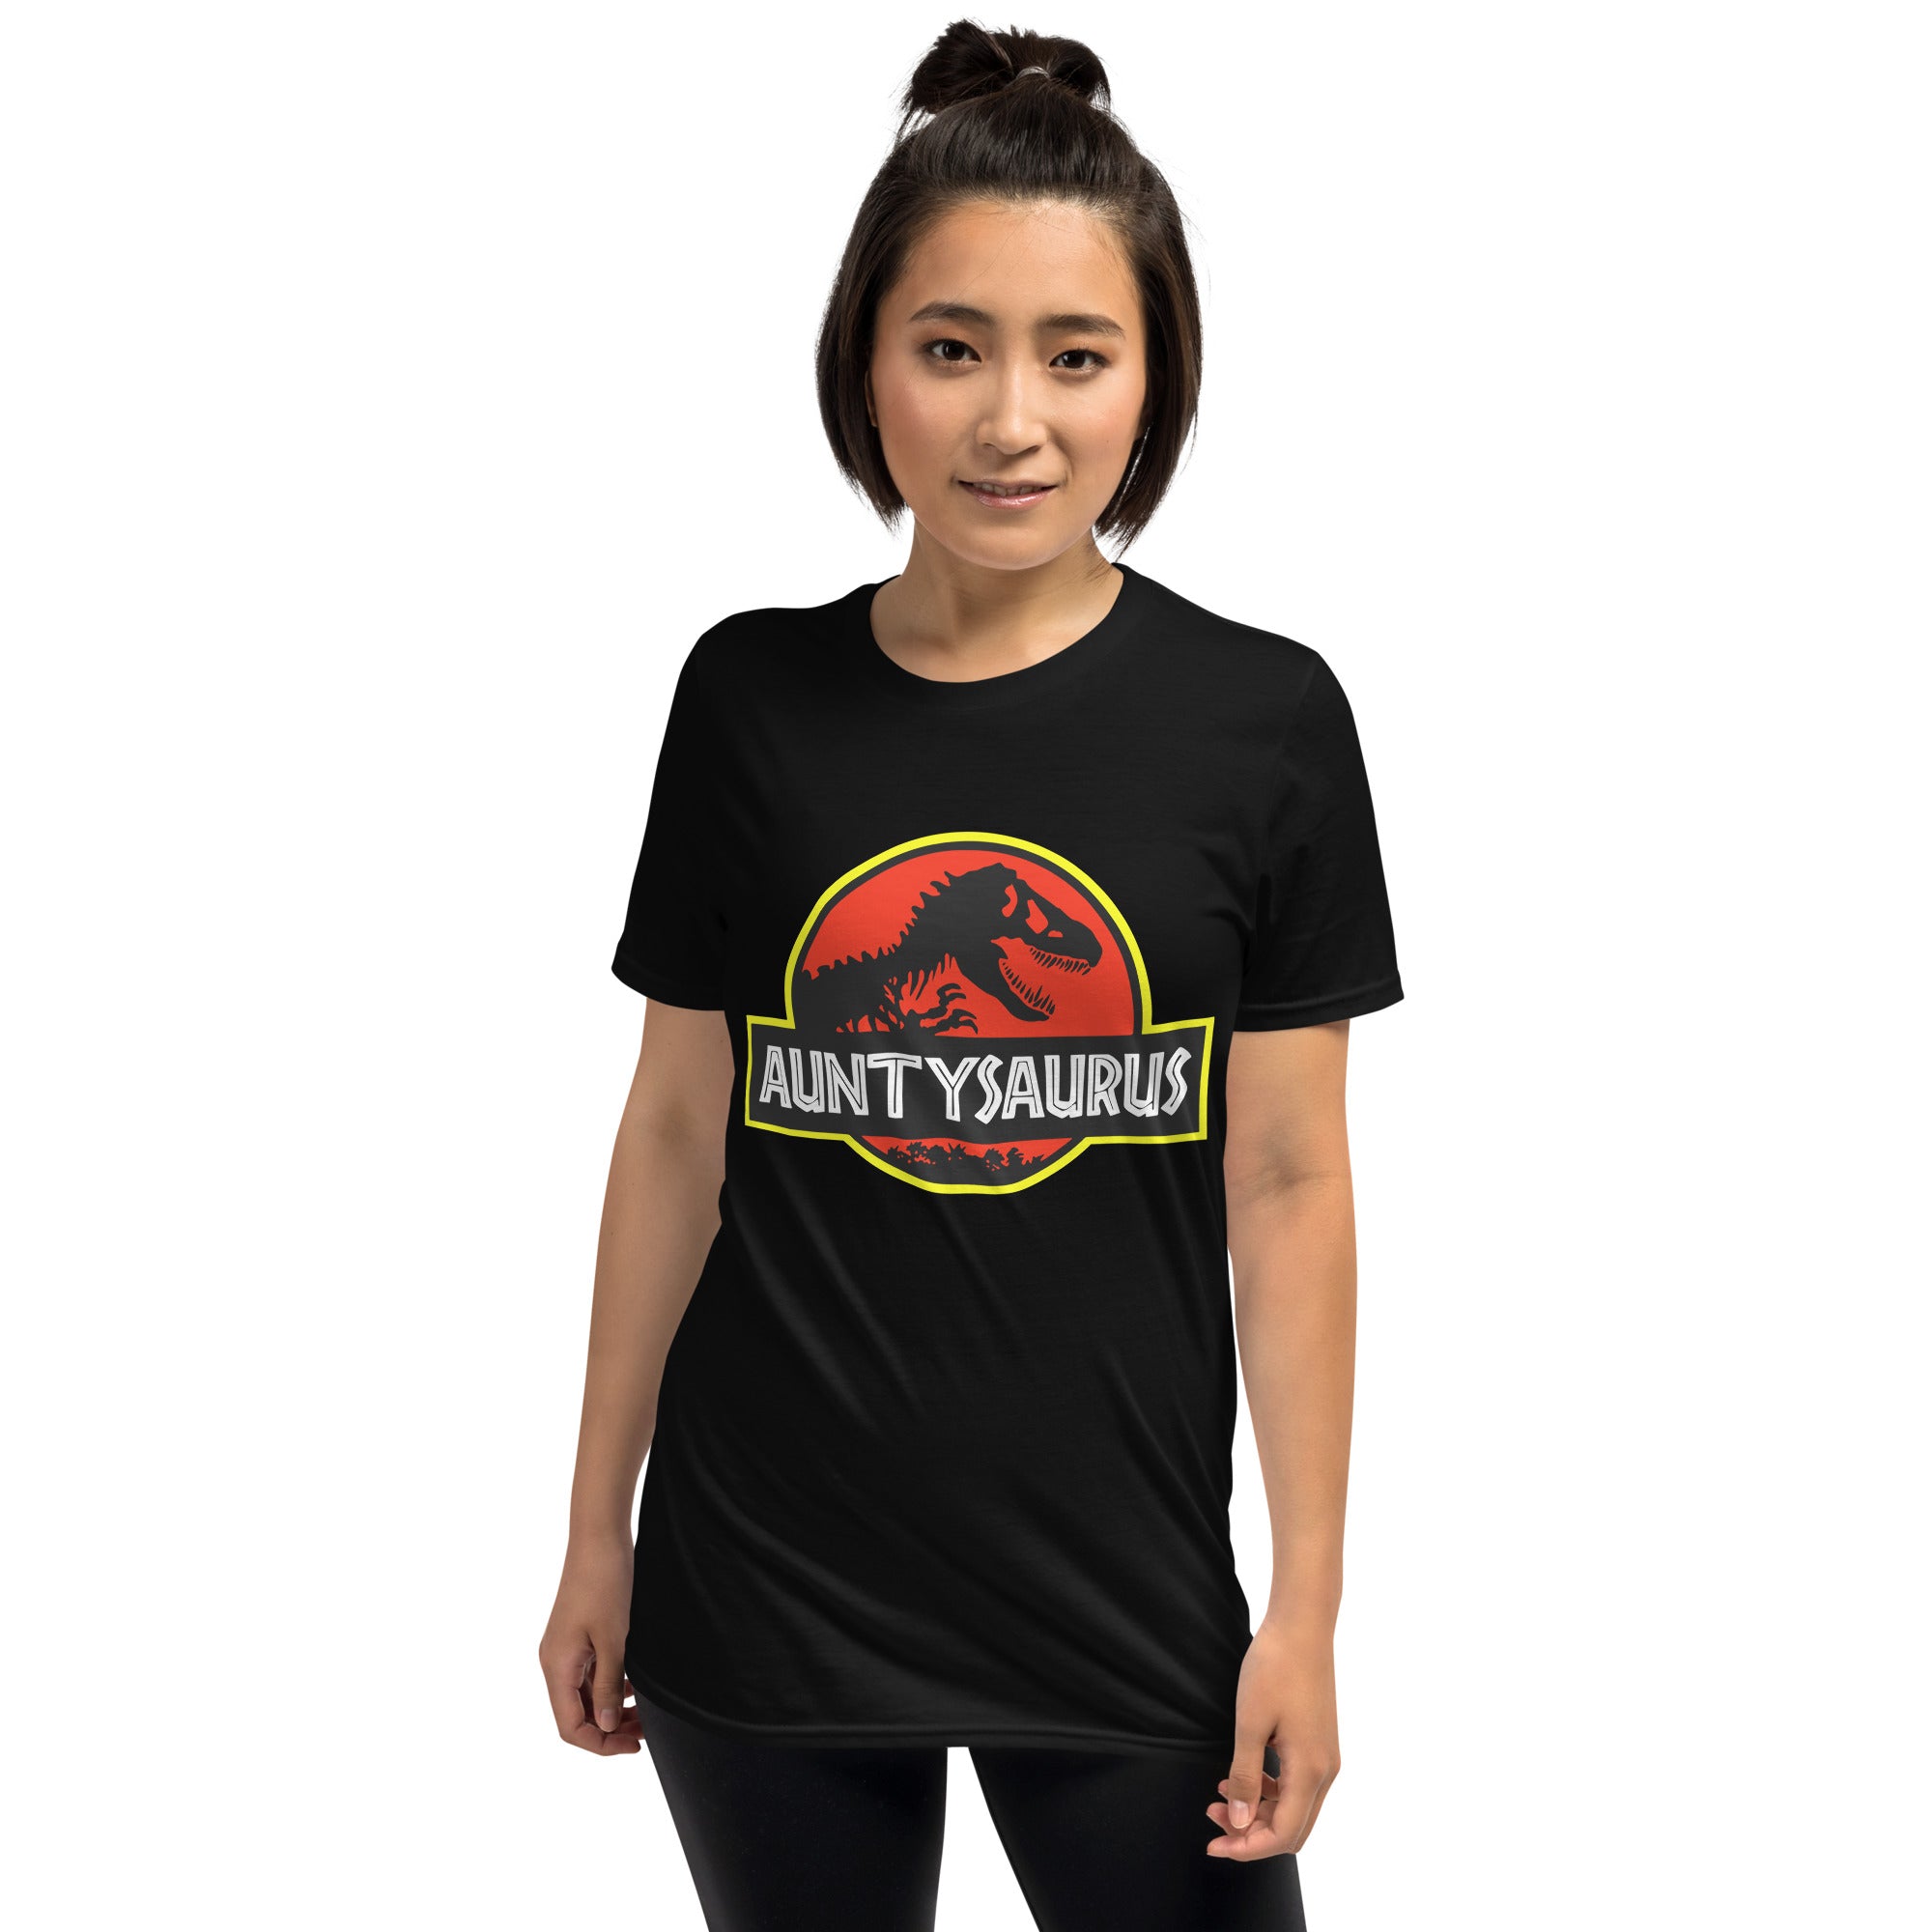 Auntysaurus - Short-Sleeve Unisex T-Shirt